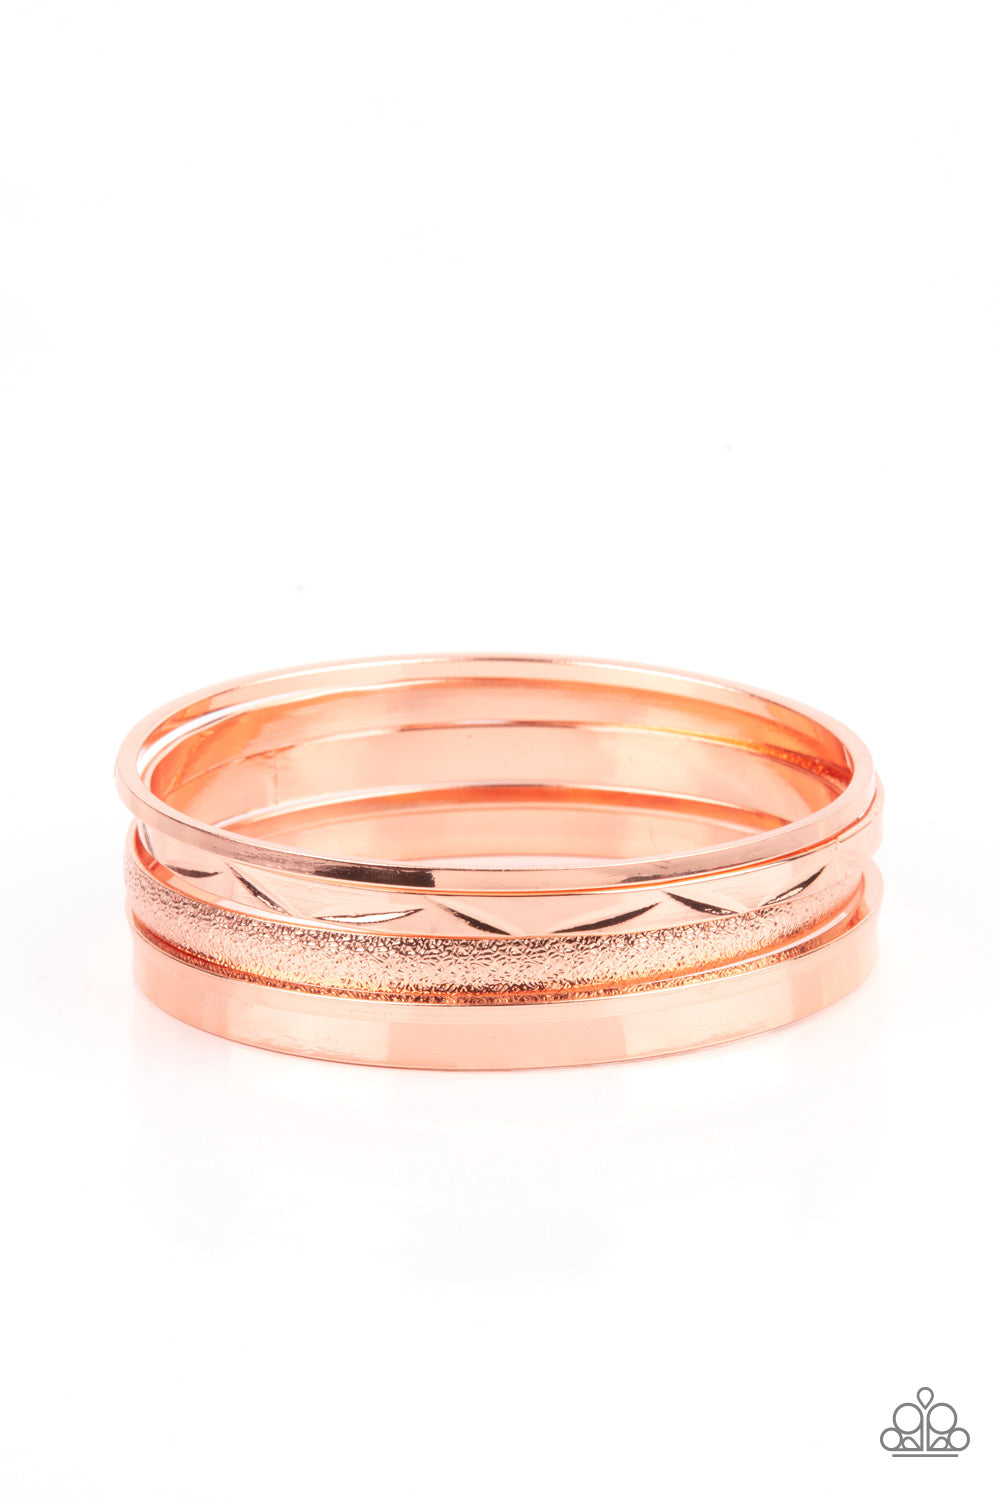 Stackable Style - Copper Bangle Bracelet Set - Princess Glam Shop